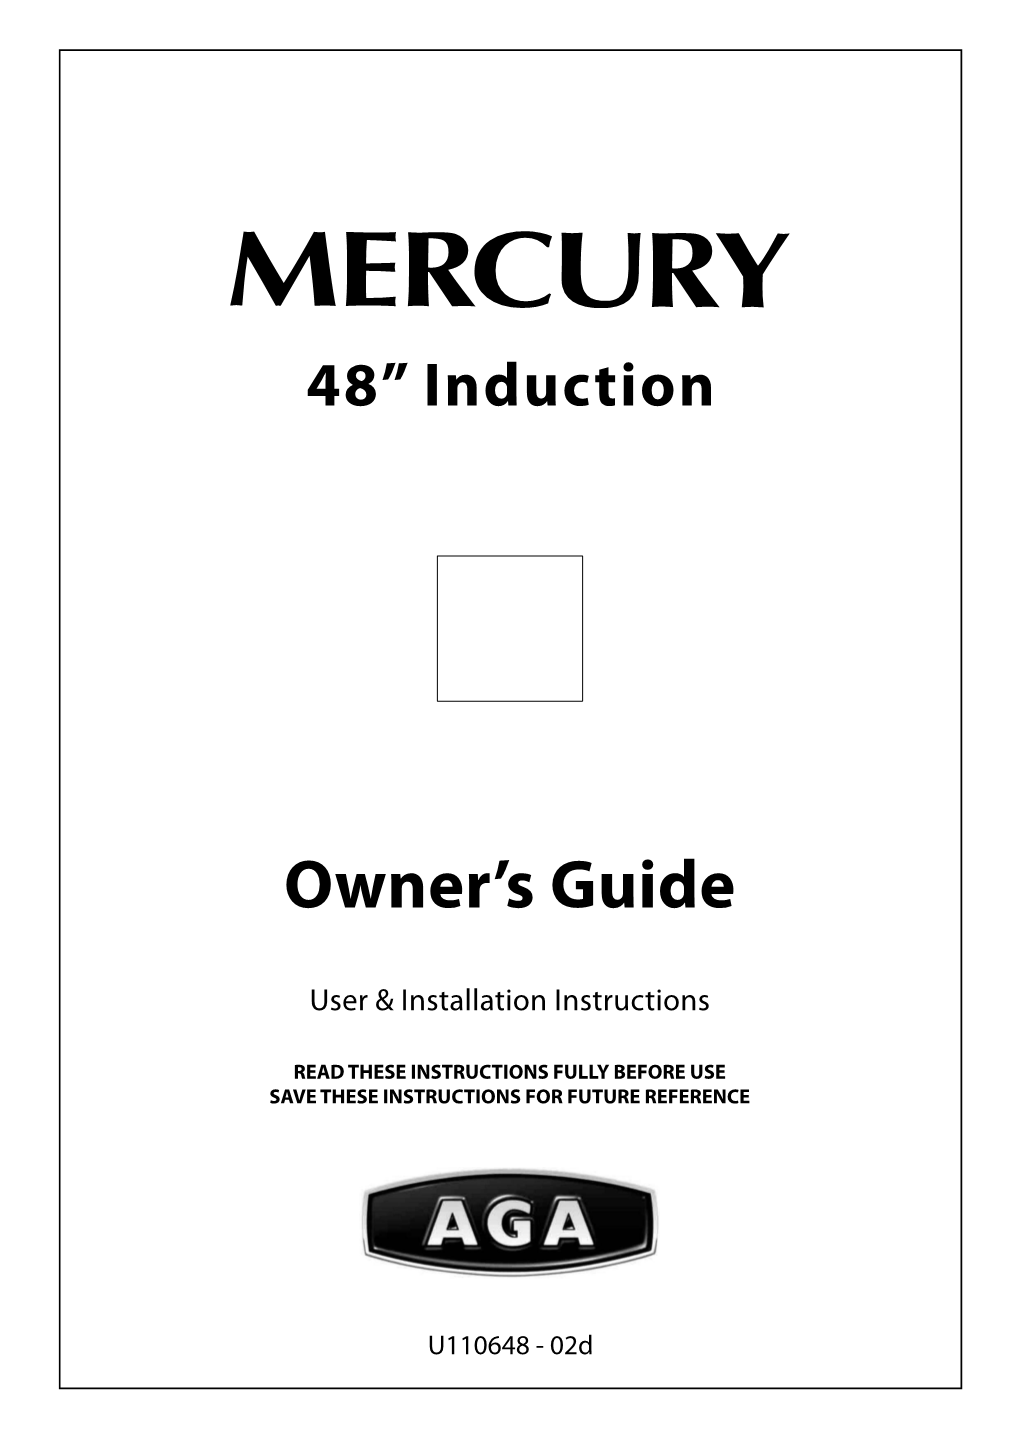 AGA Mercury 48" Induction